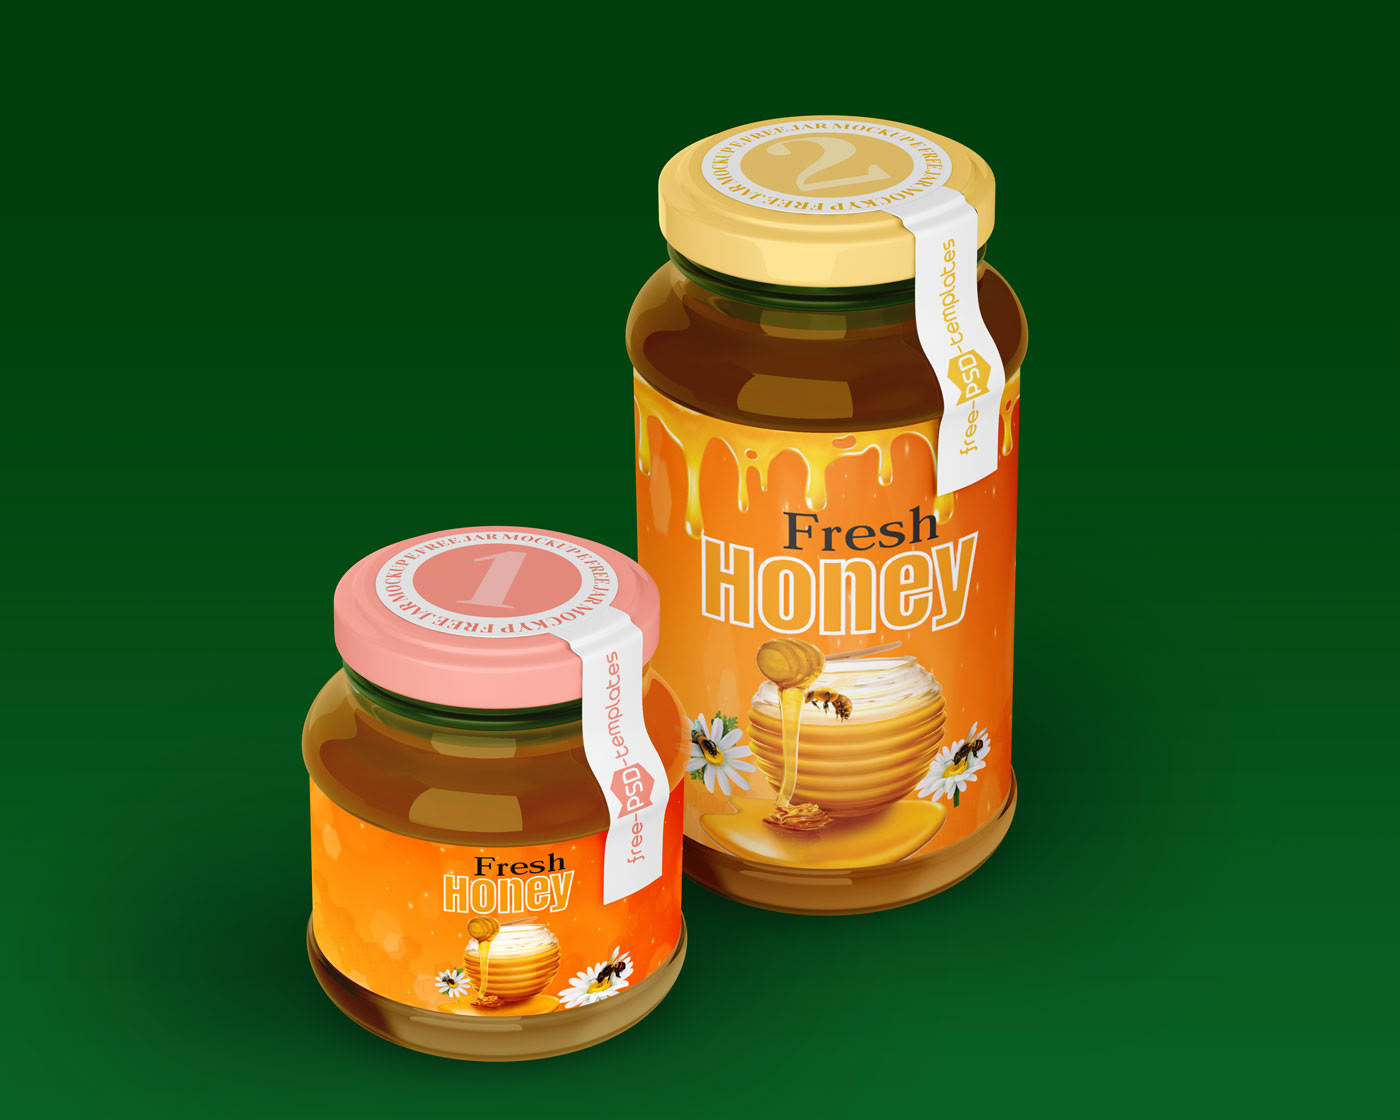 packaging design product Packaging product design  label design bottle jar label product packaging honey jar label design lebel